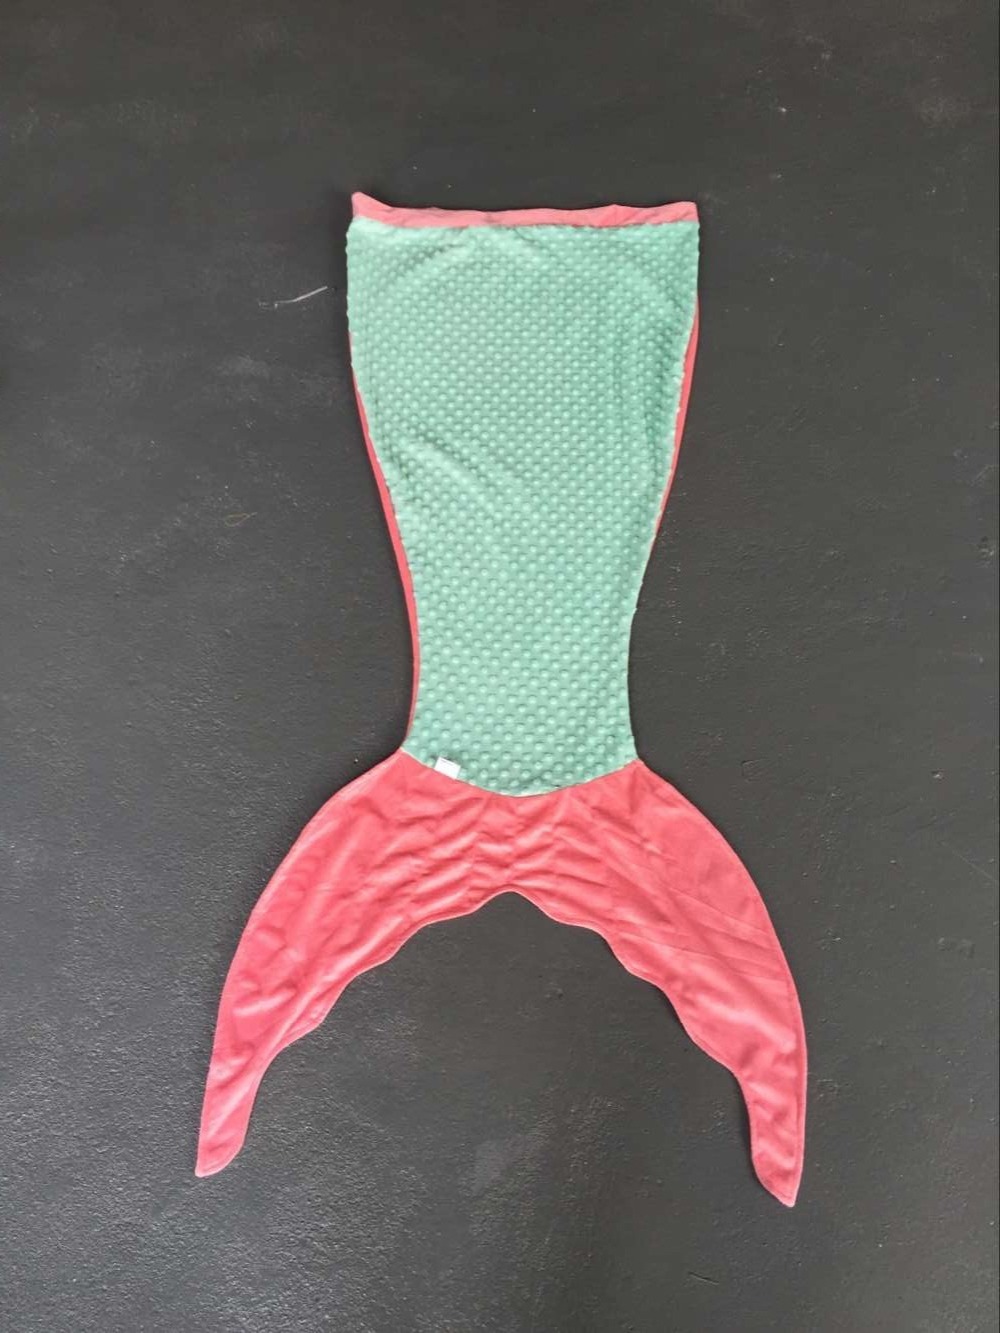 wholesale PRE ORDER 100 pieces LOT 9 color mermaid tail blanket Baby Minky Blanket cotton blanket